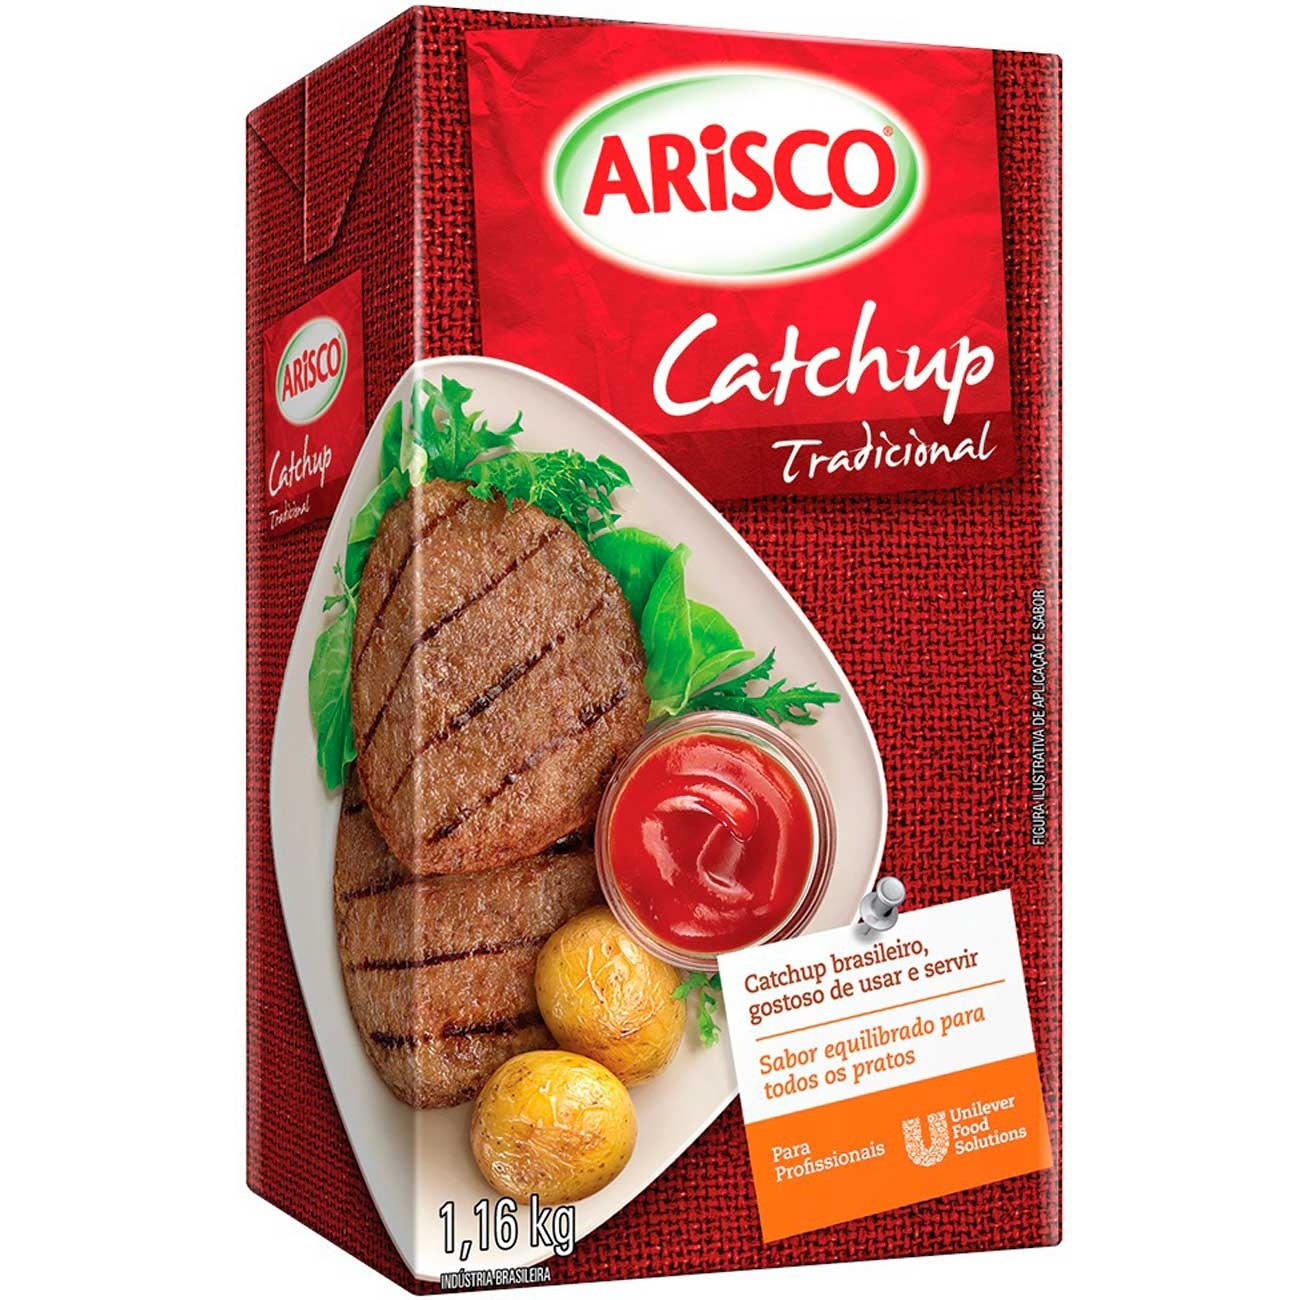 Catchup Arisco Tetra Pack 1,16kg